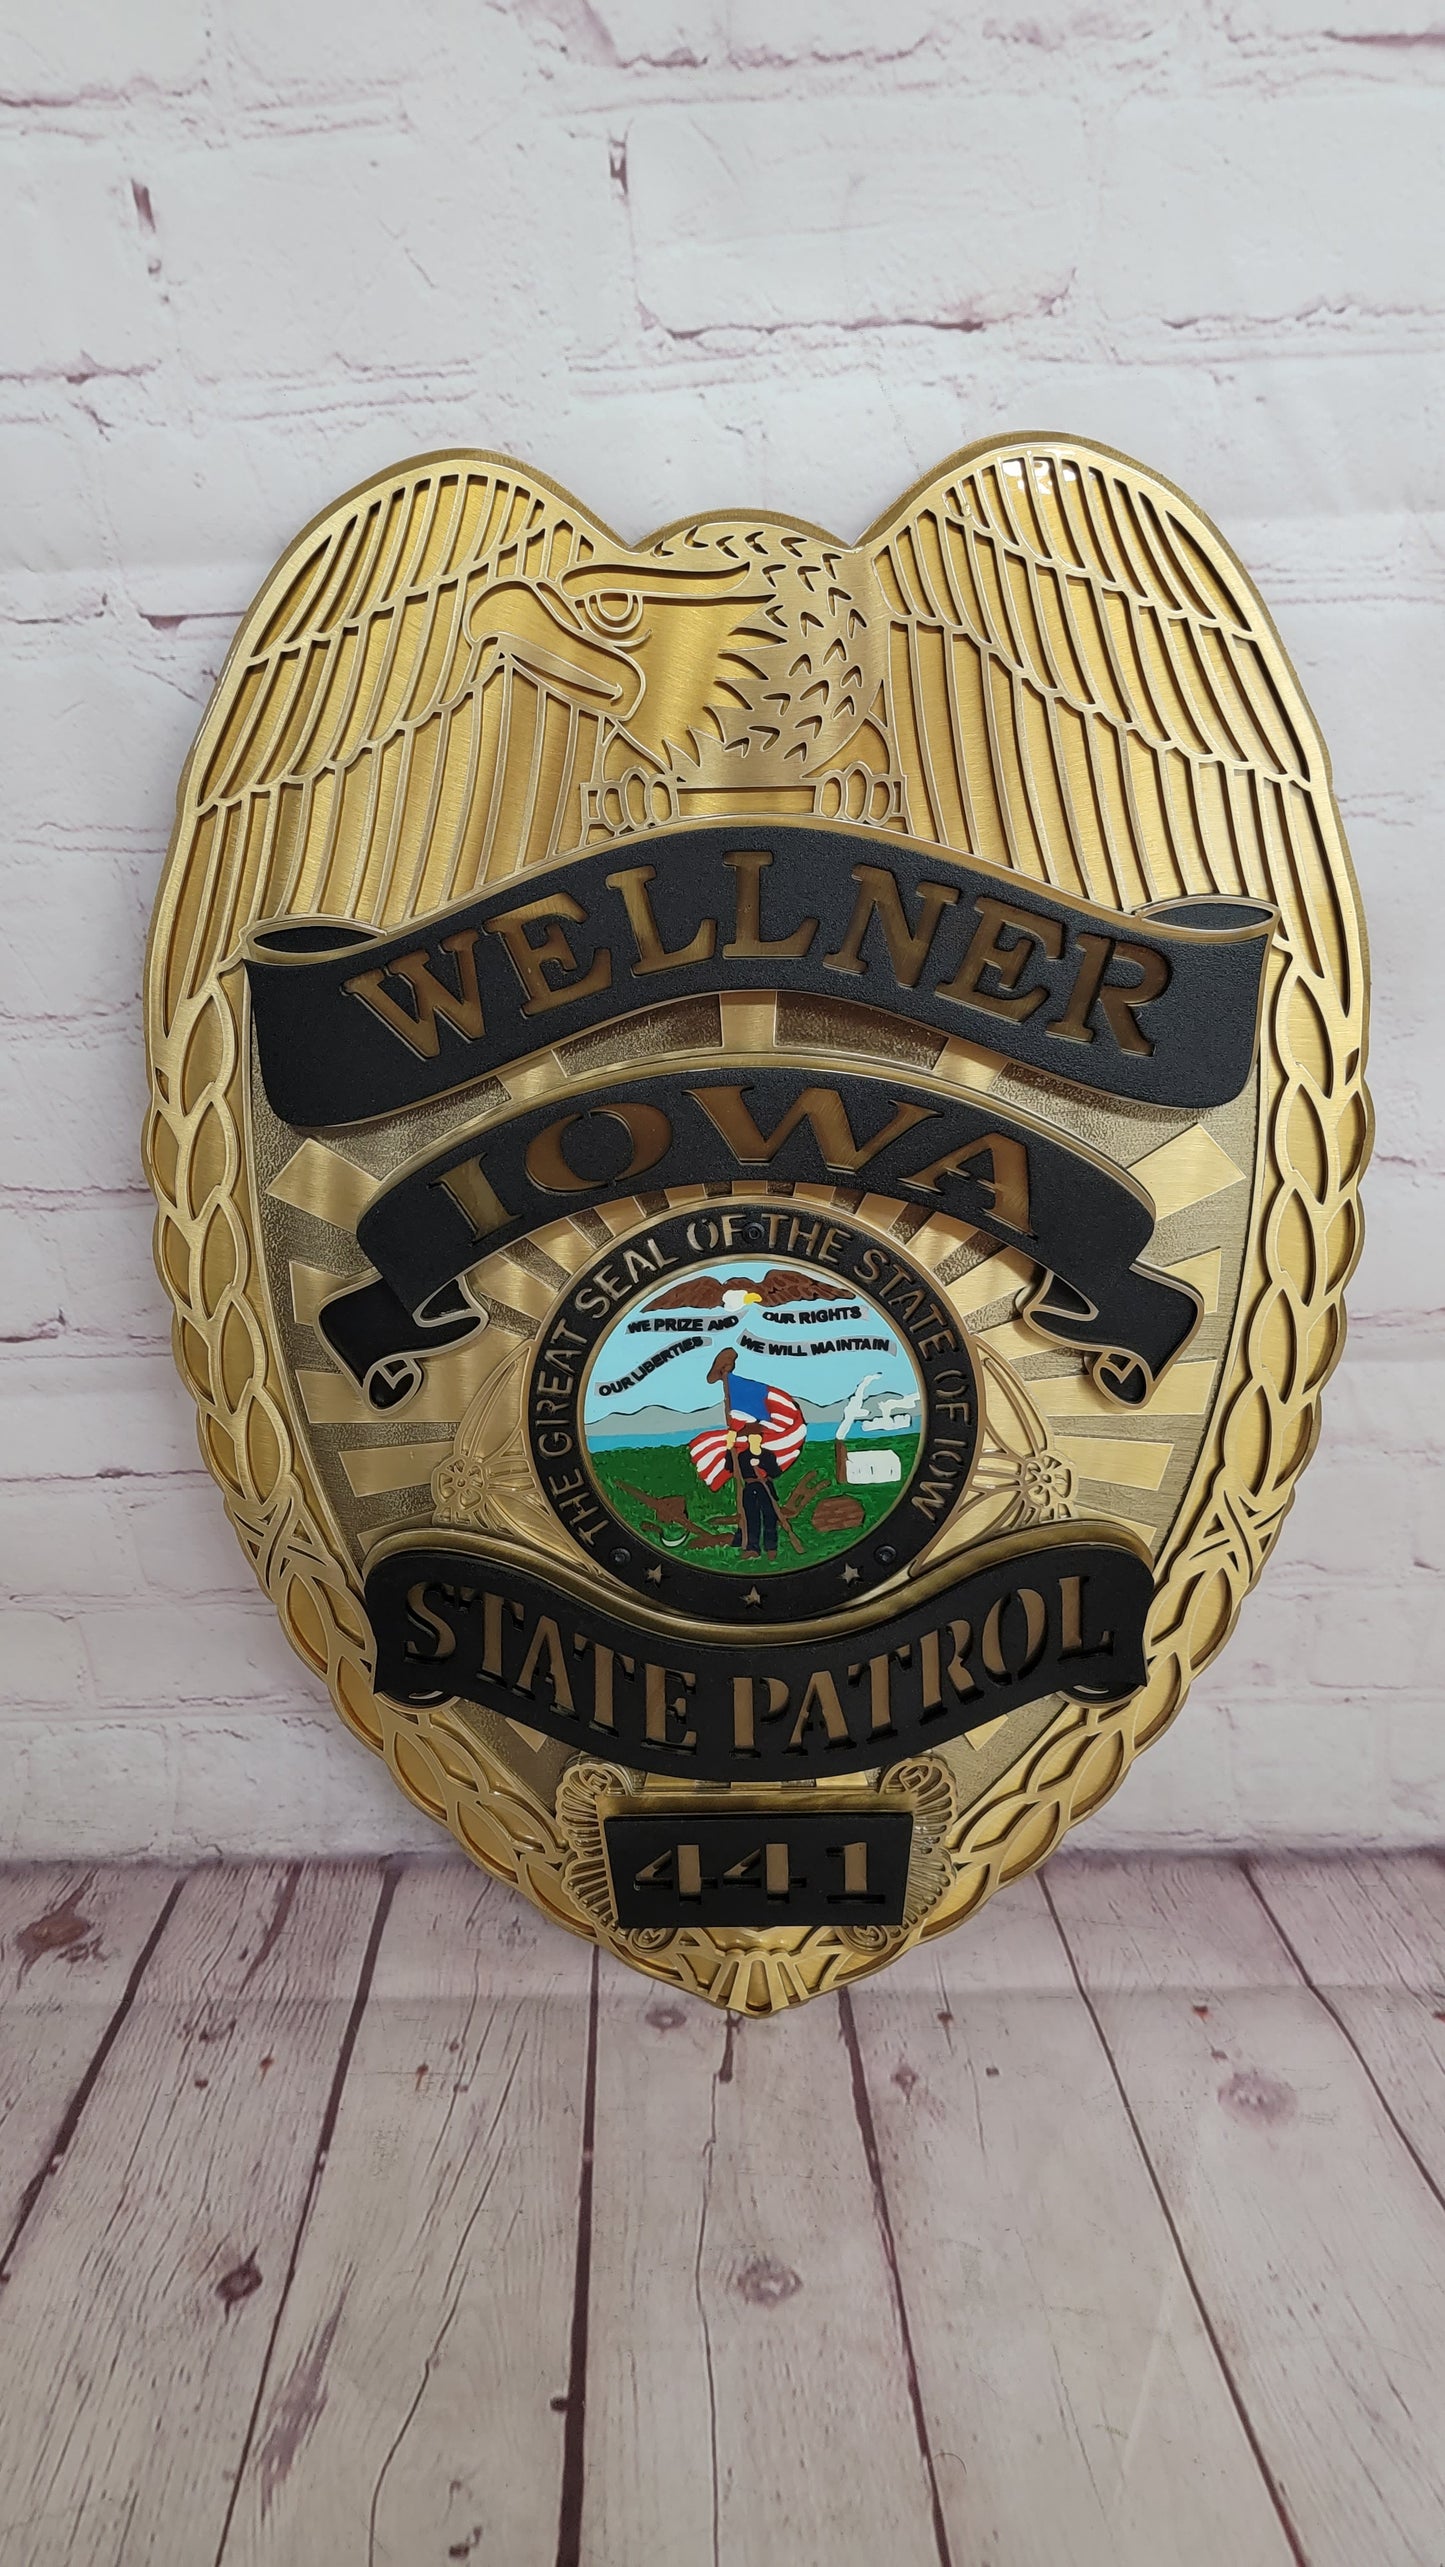 State Patrol Wellner Iowa Badge